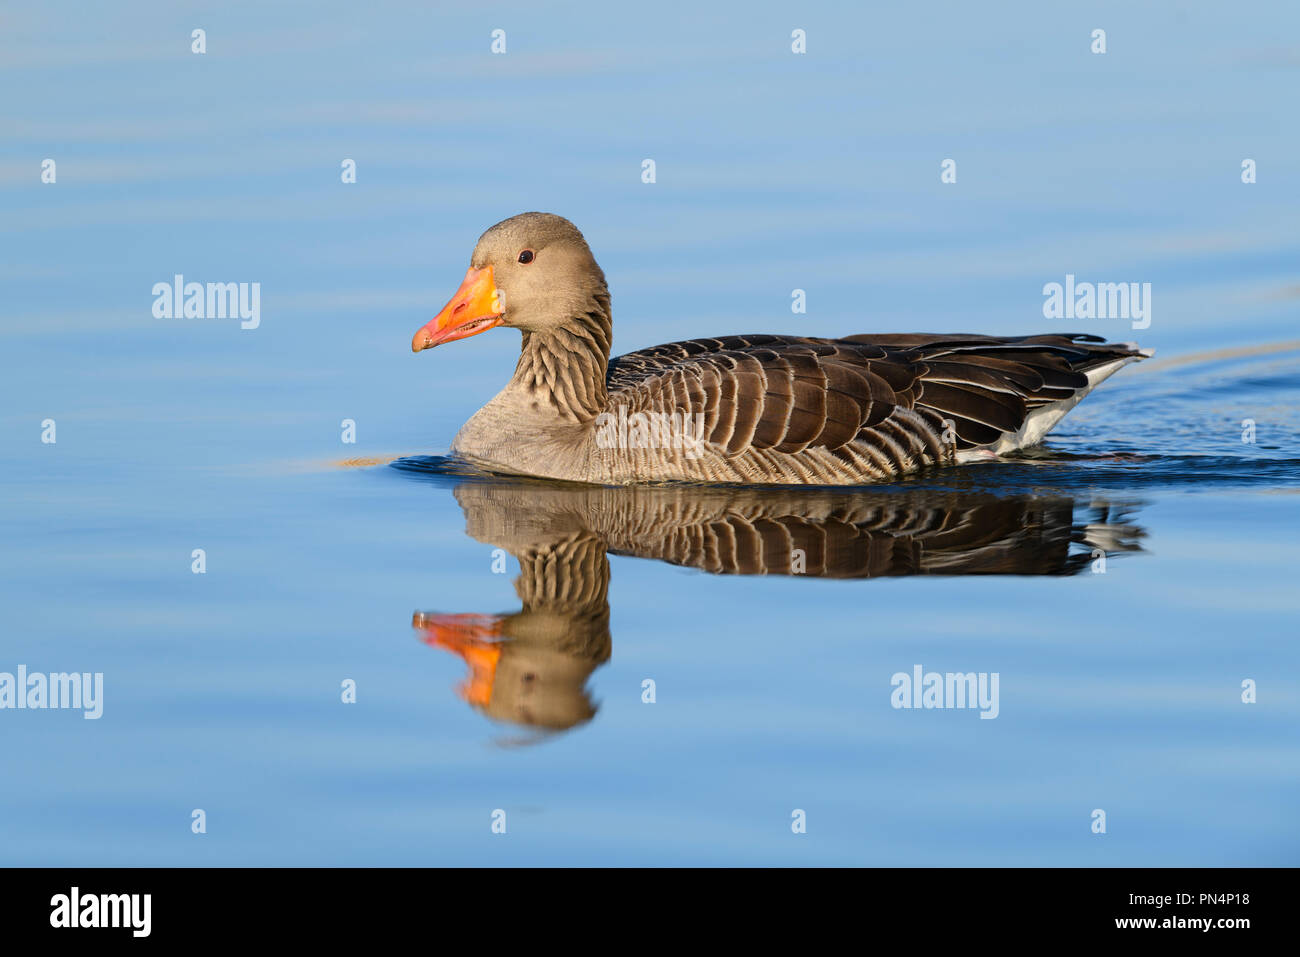 Greylag Goose, Anser anser, in water swimming Stock Photo